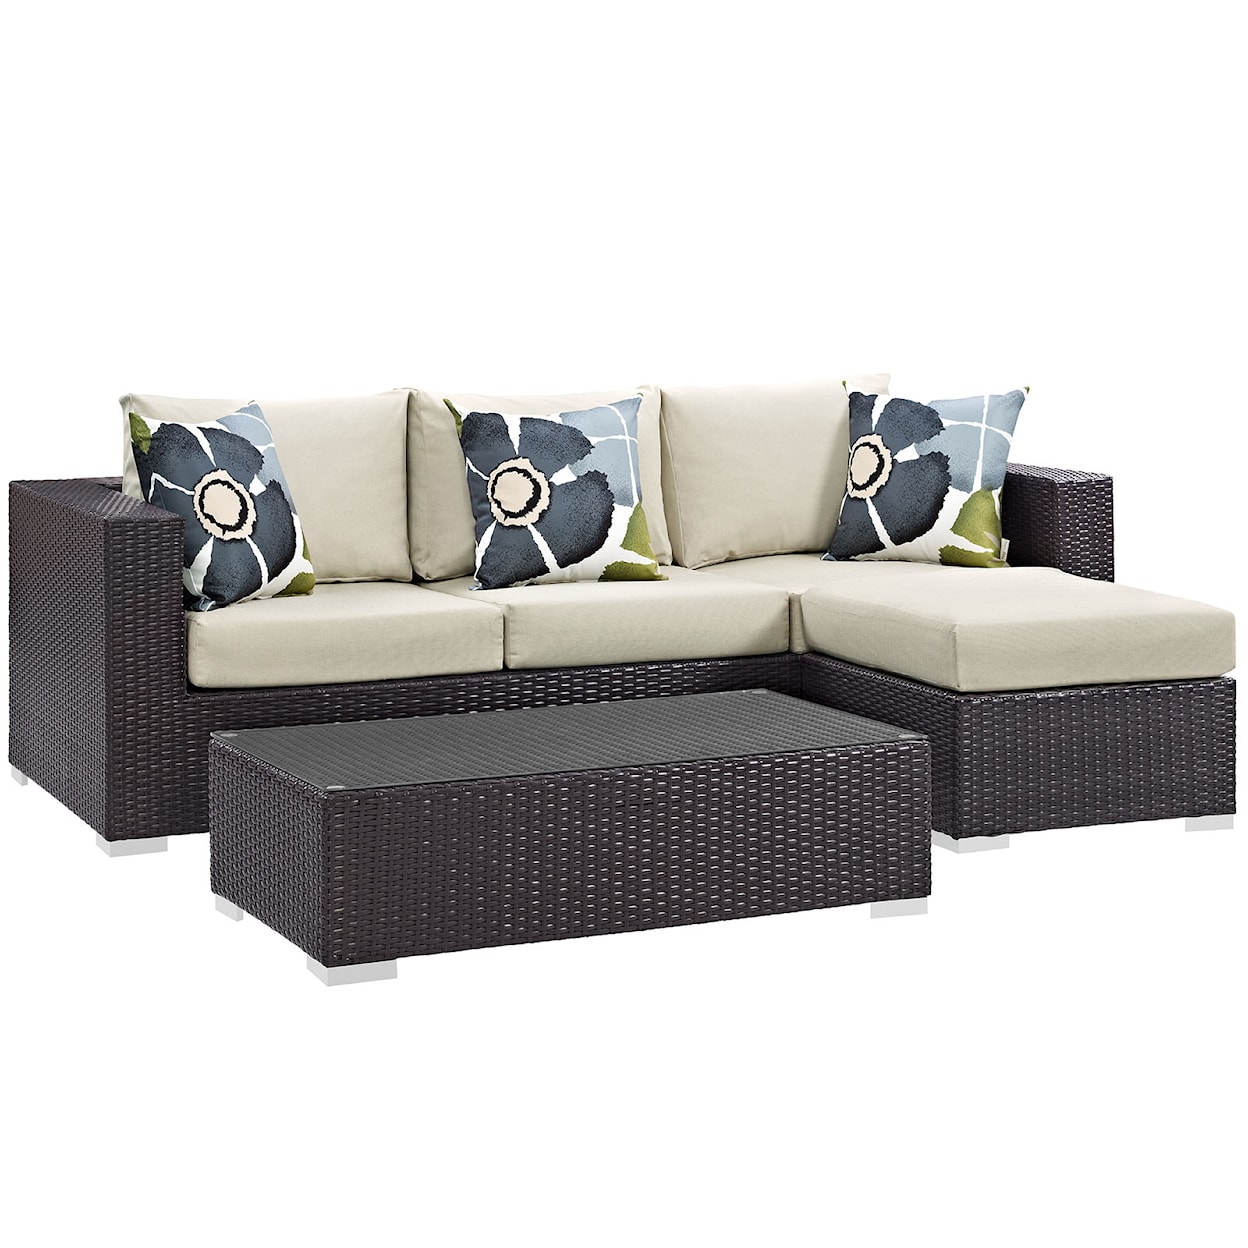 Modway Convene Outdoor 3 Piece Sofa Set